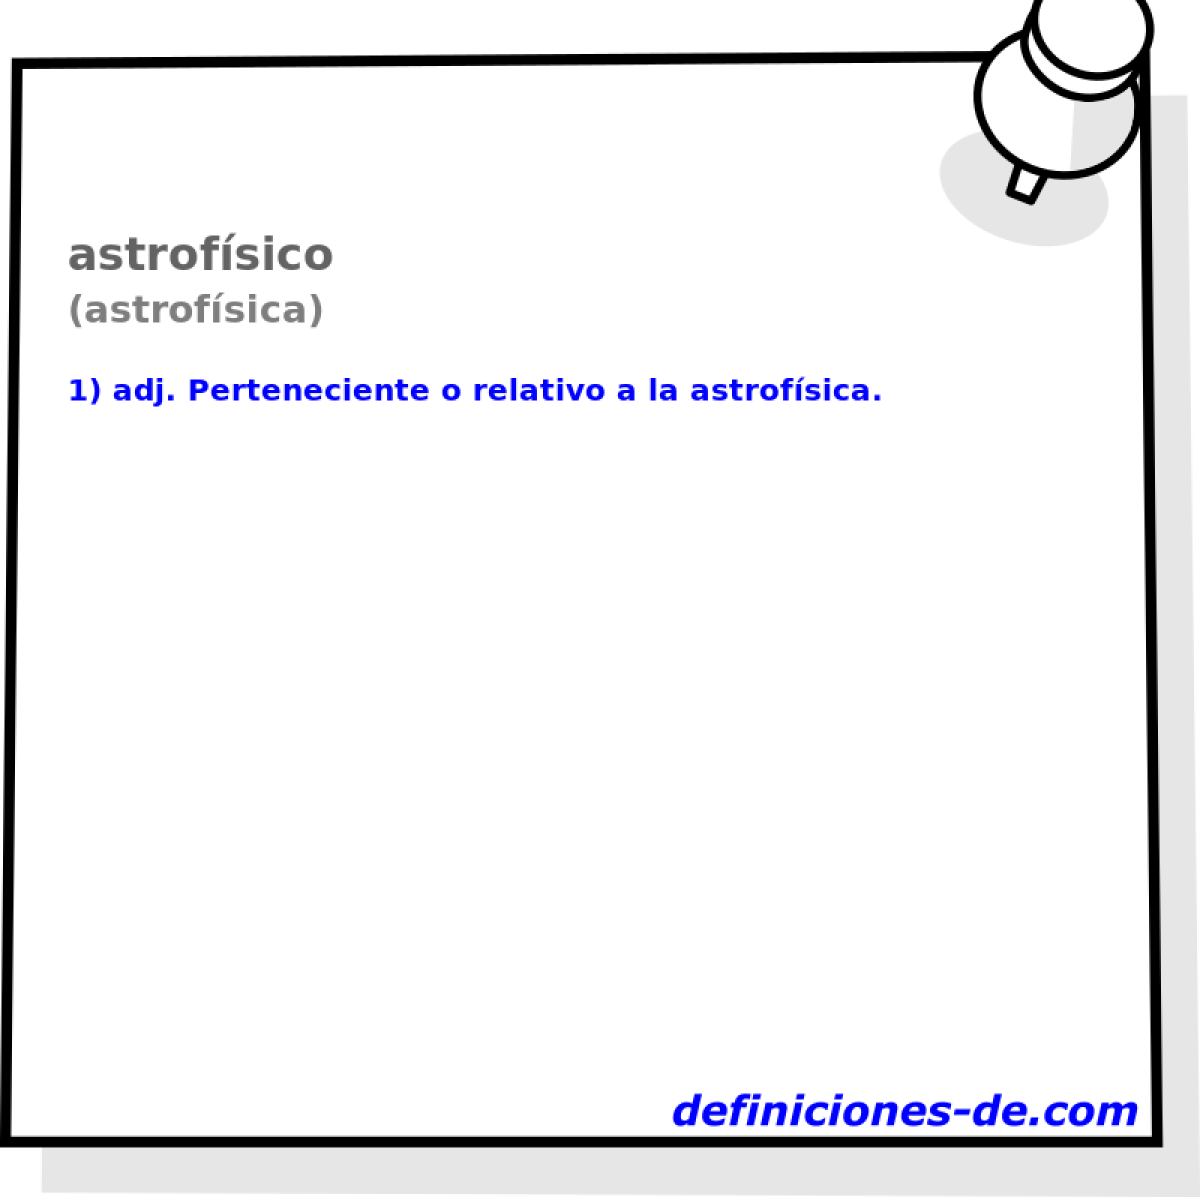 astrofsico (astrofsica)